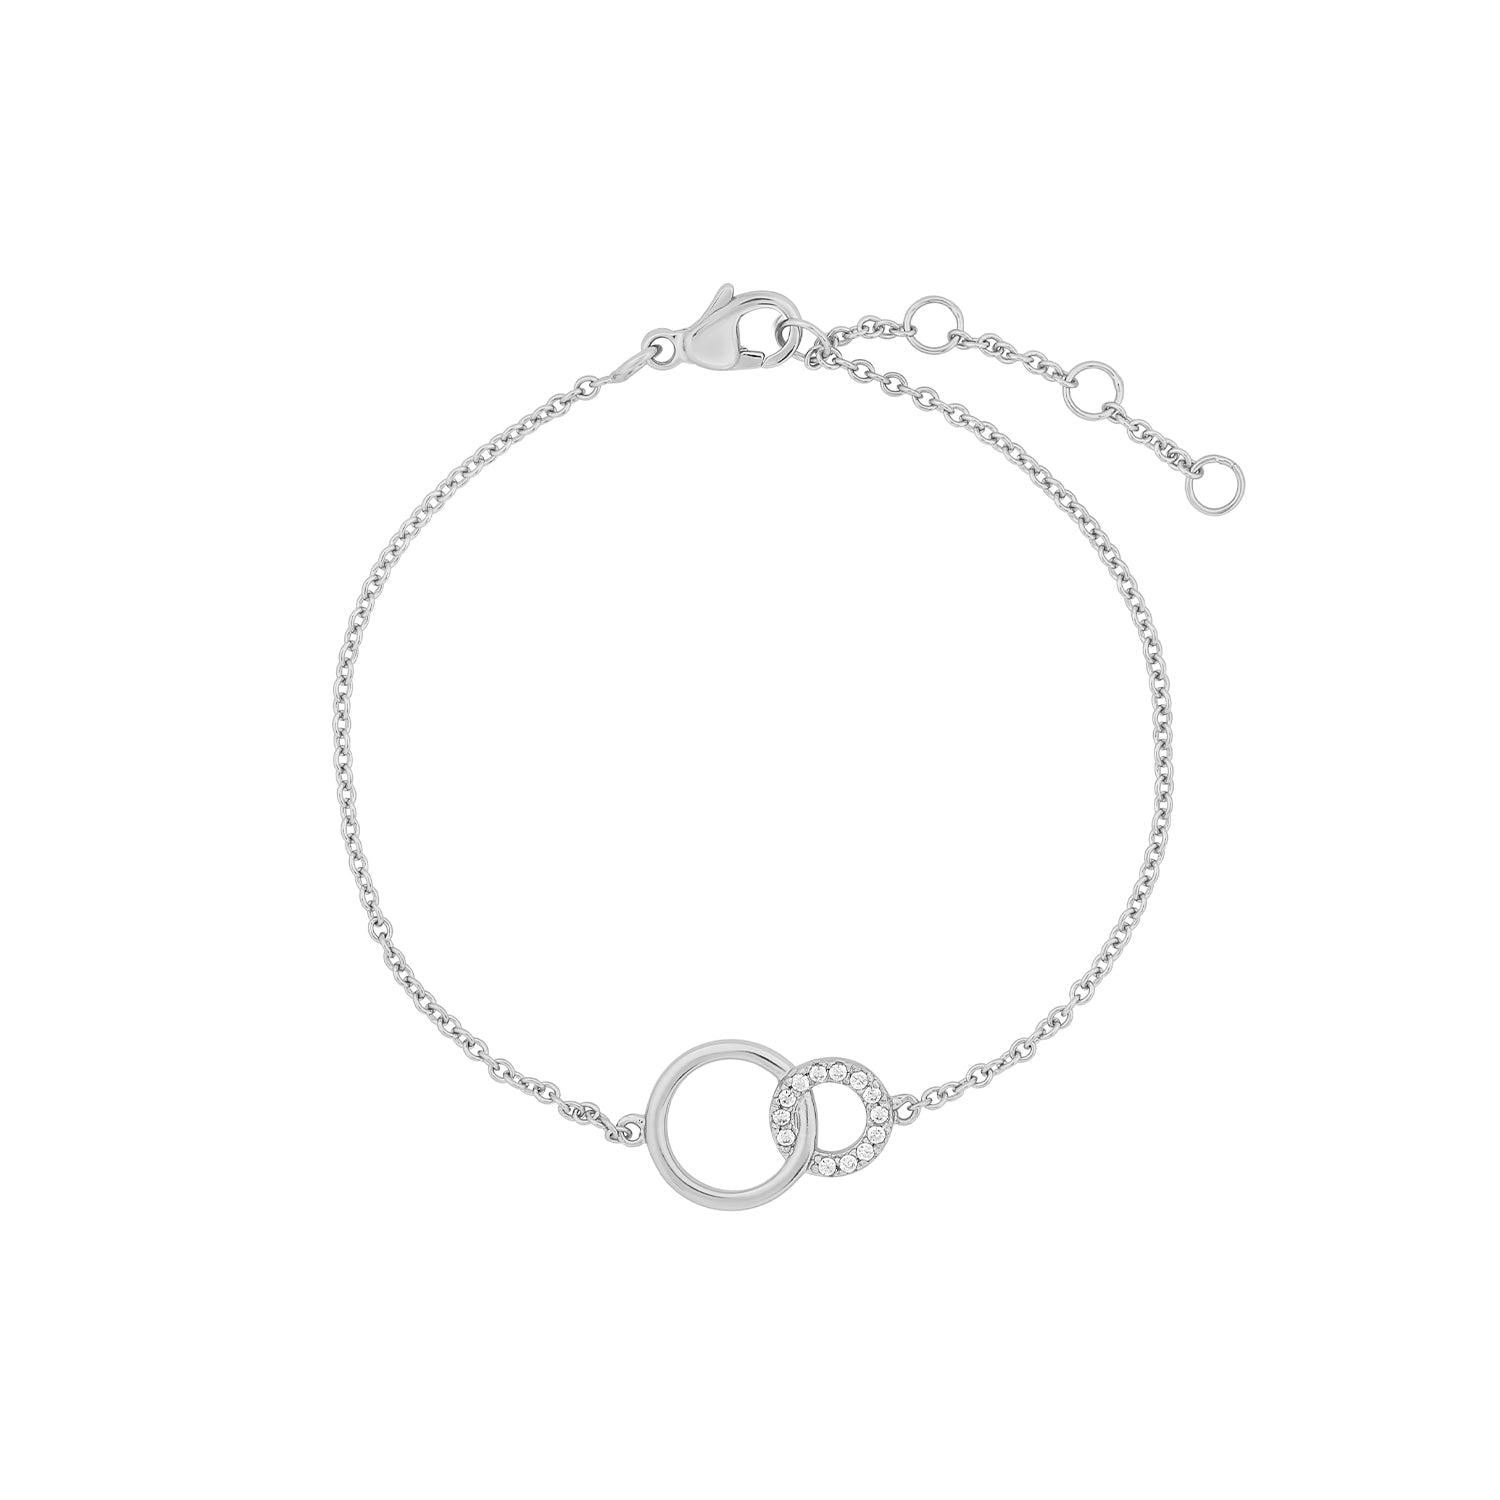 Elegant and minimalist 925 silver pendant bracelet set with cubic zirconia stones.